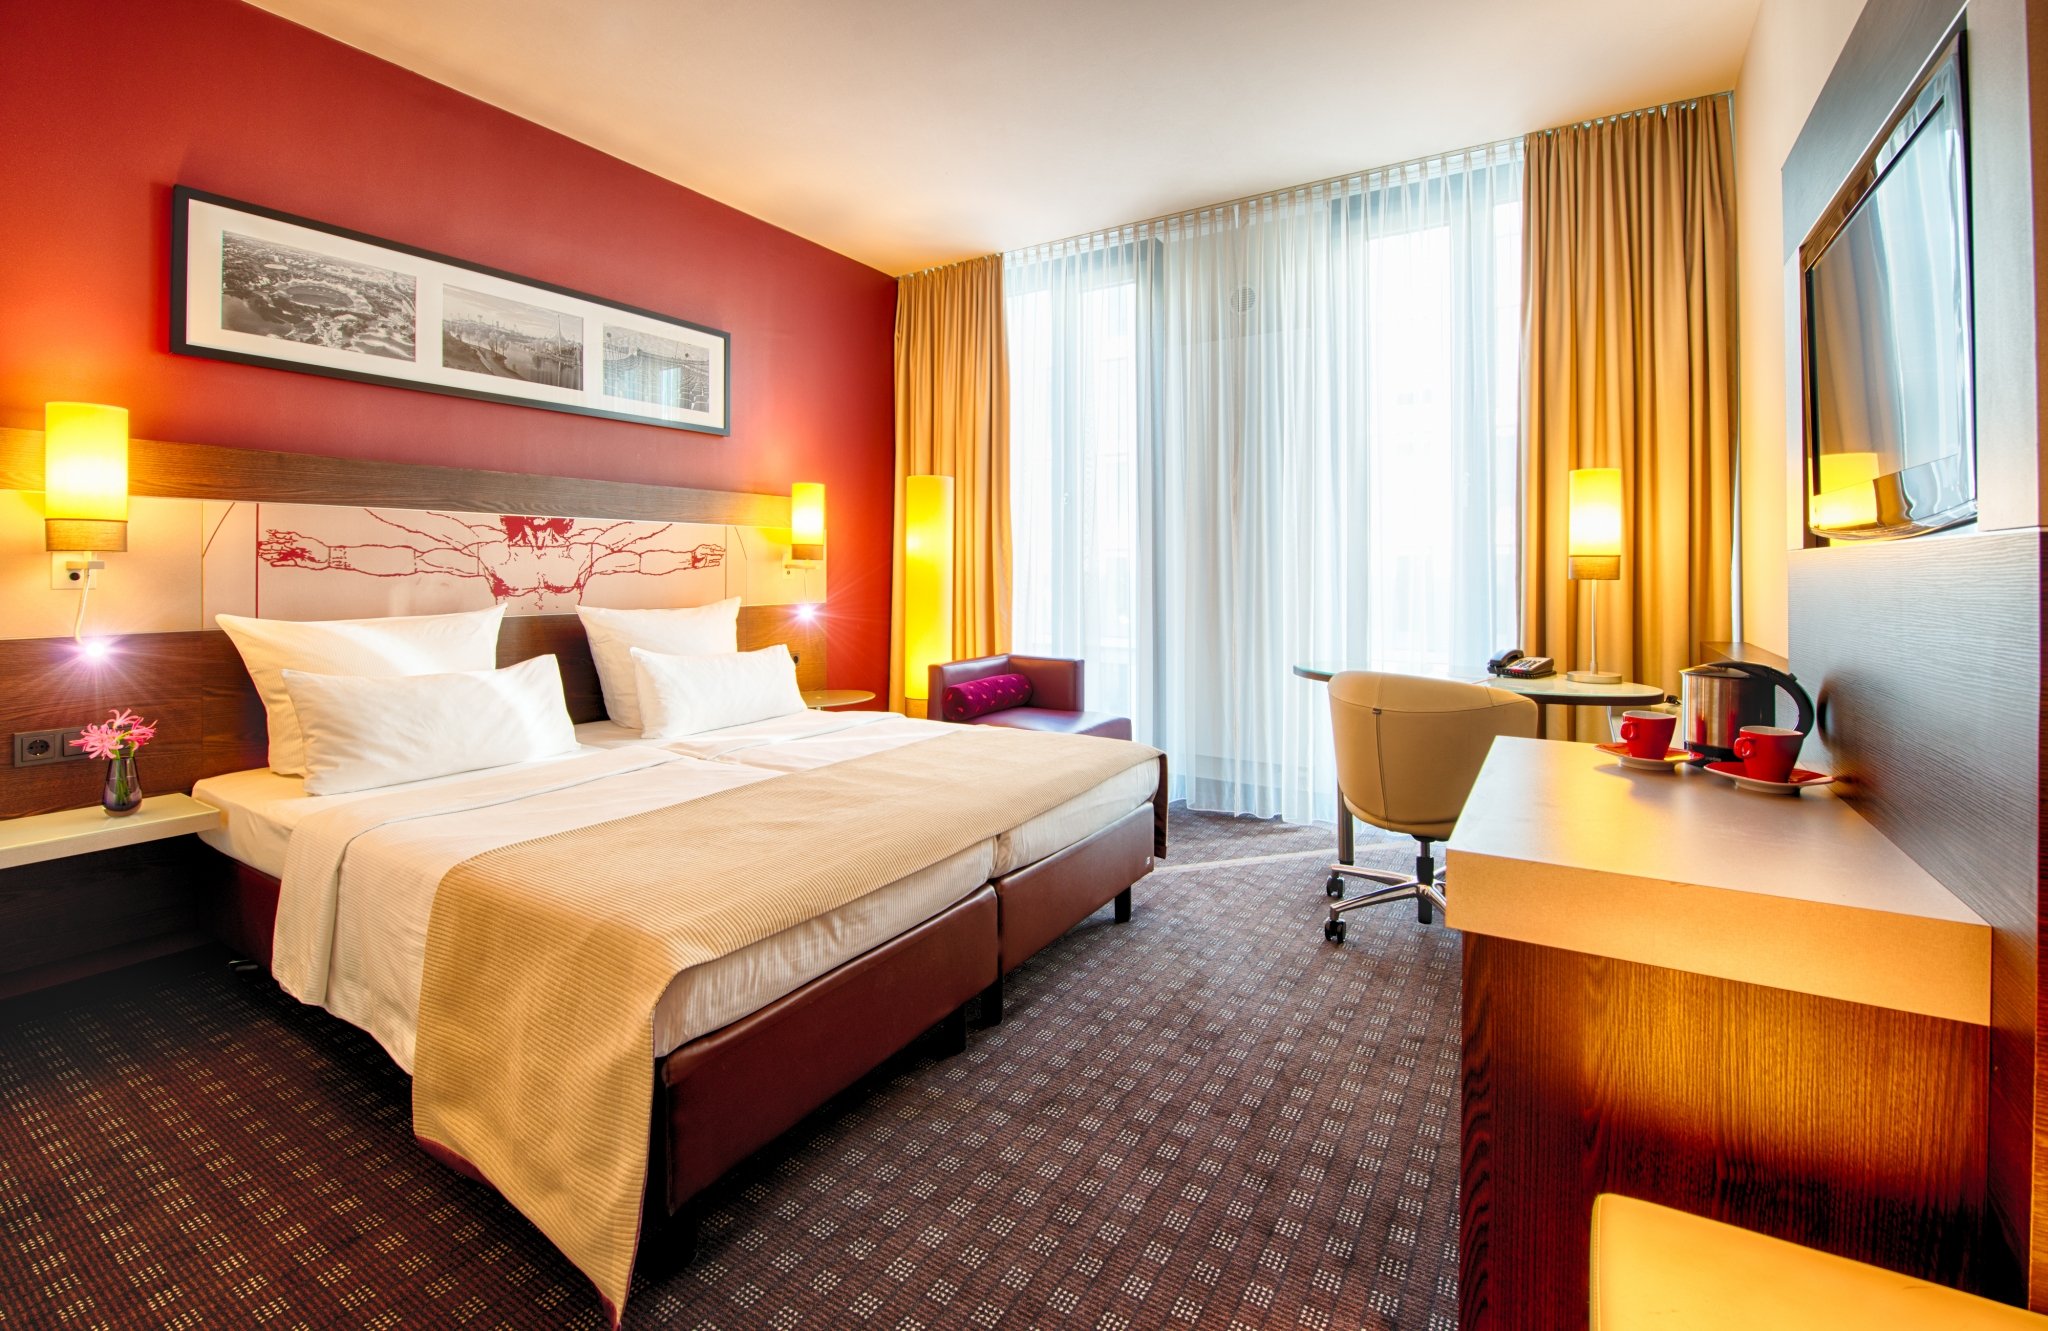 Leonardo Royal Hotel Munich - Comfort Room